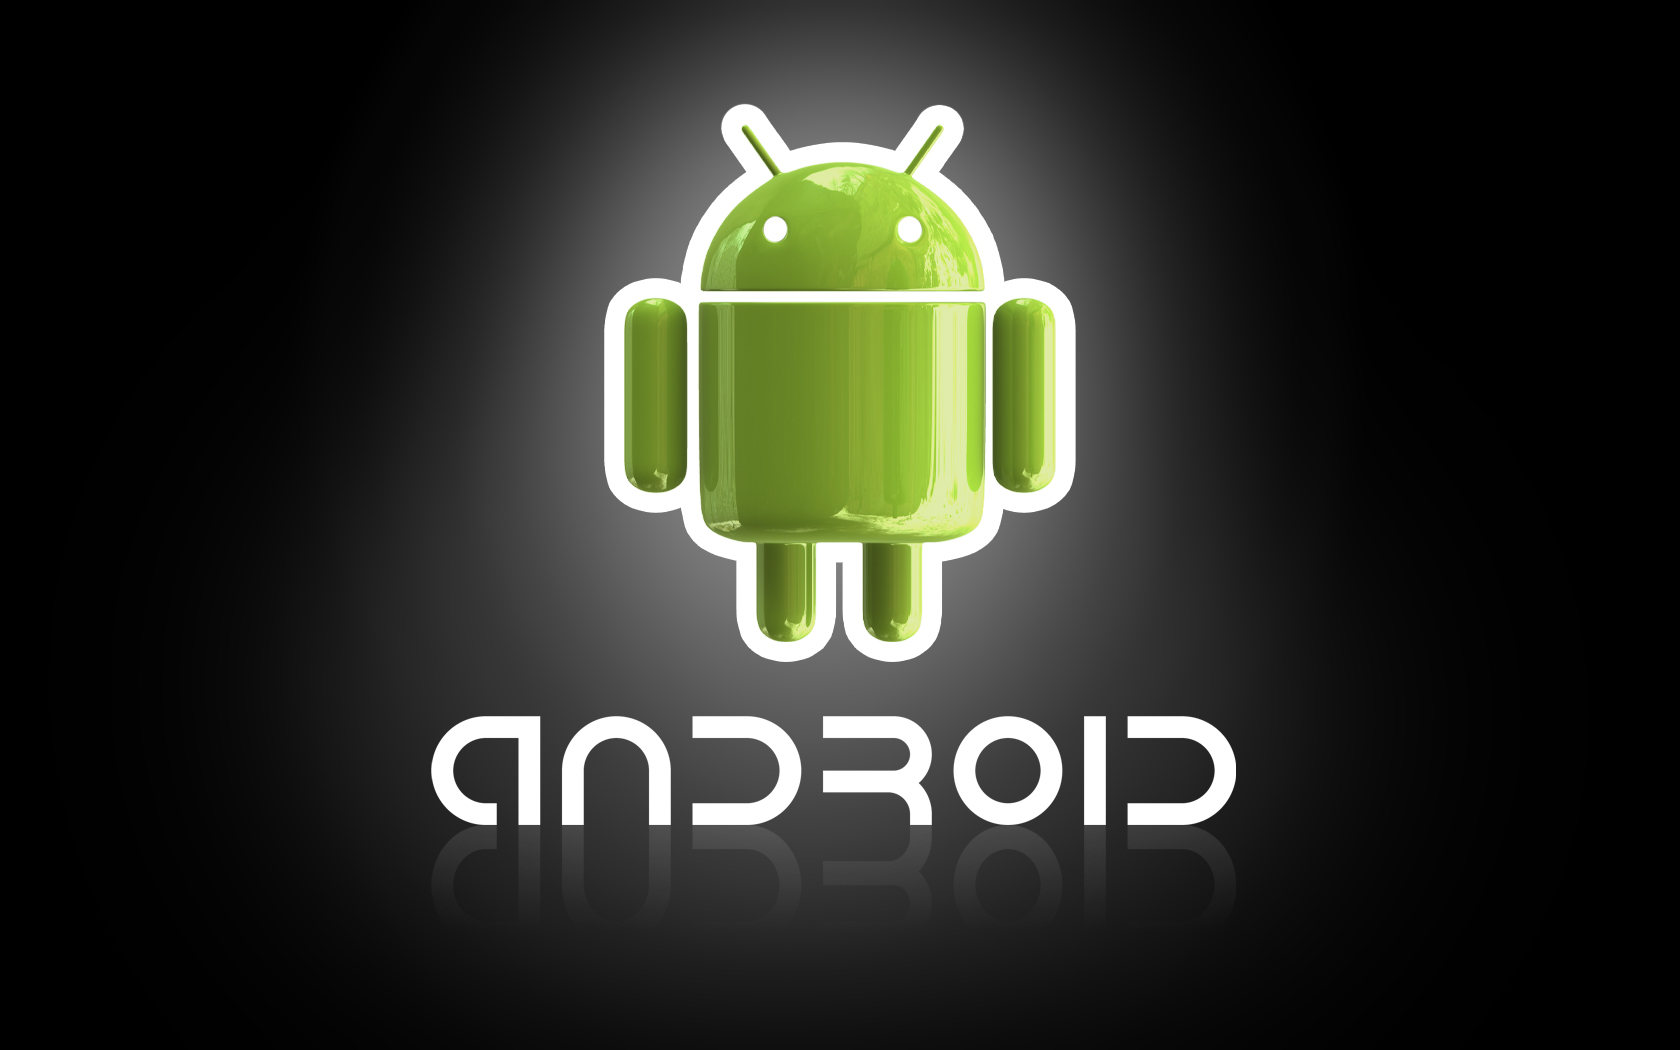 Android logo black blue | wallpaper.sc SmartPhone